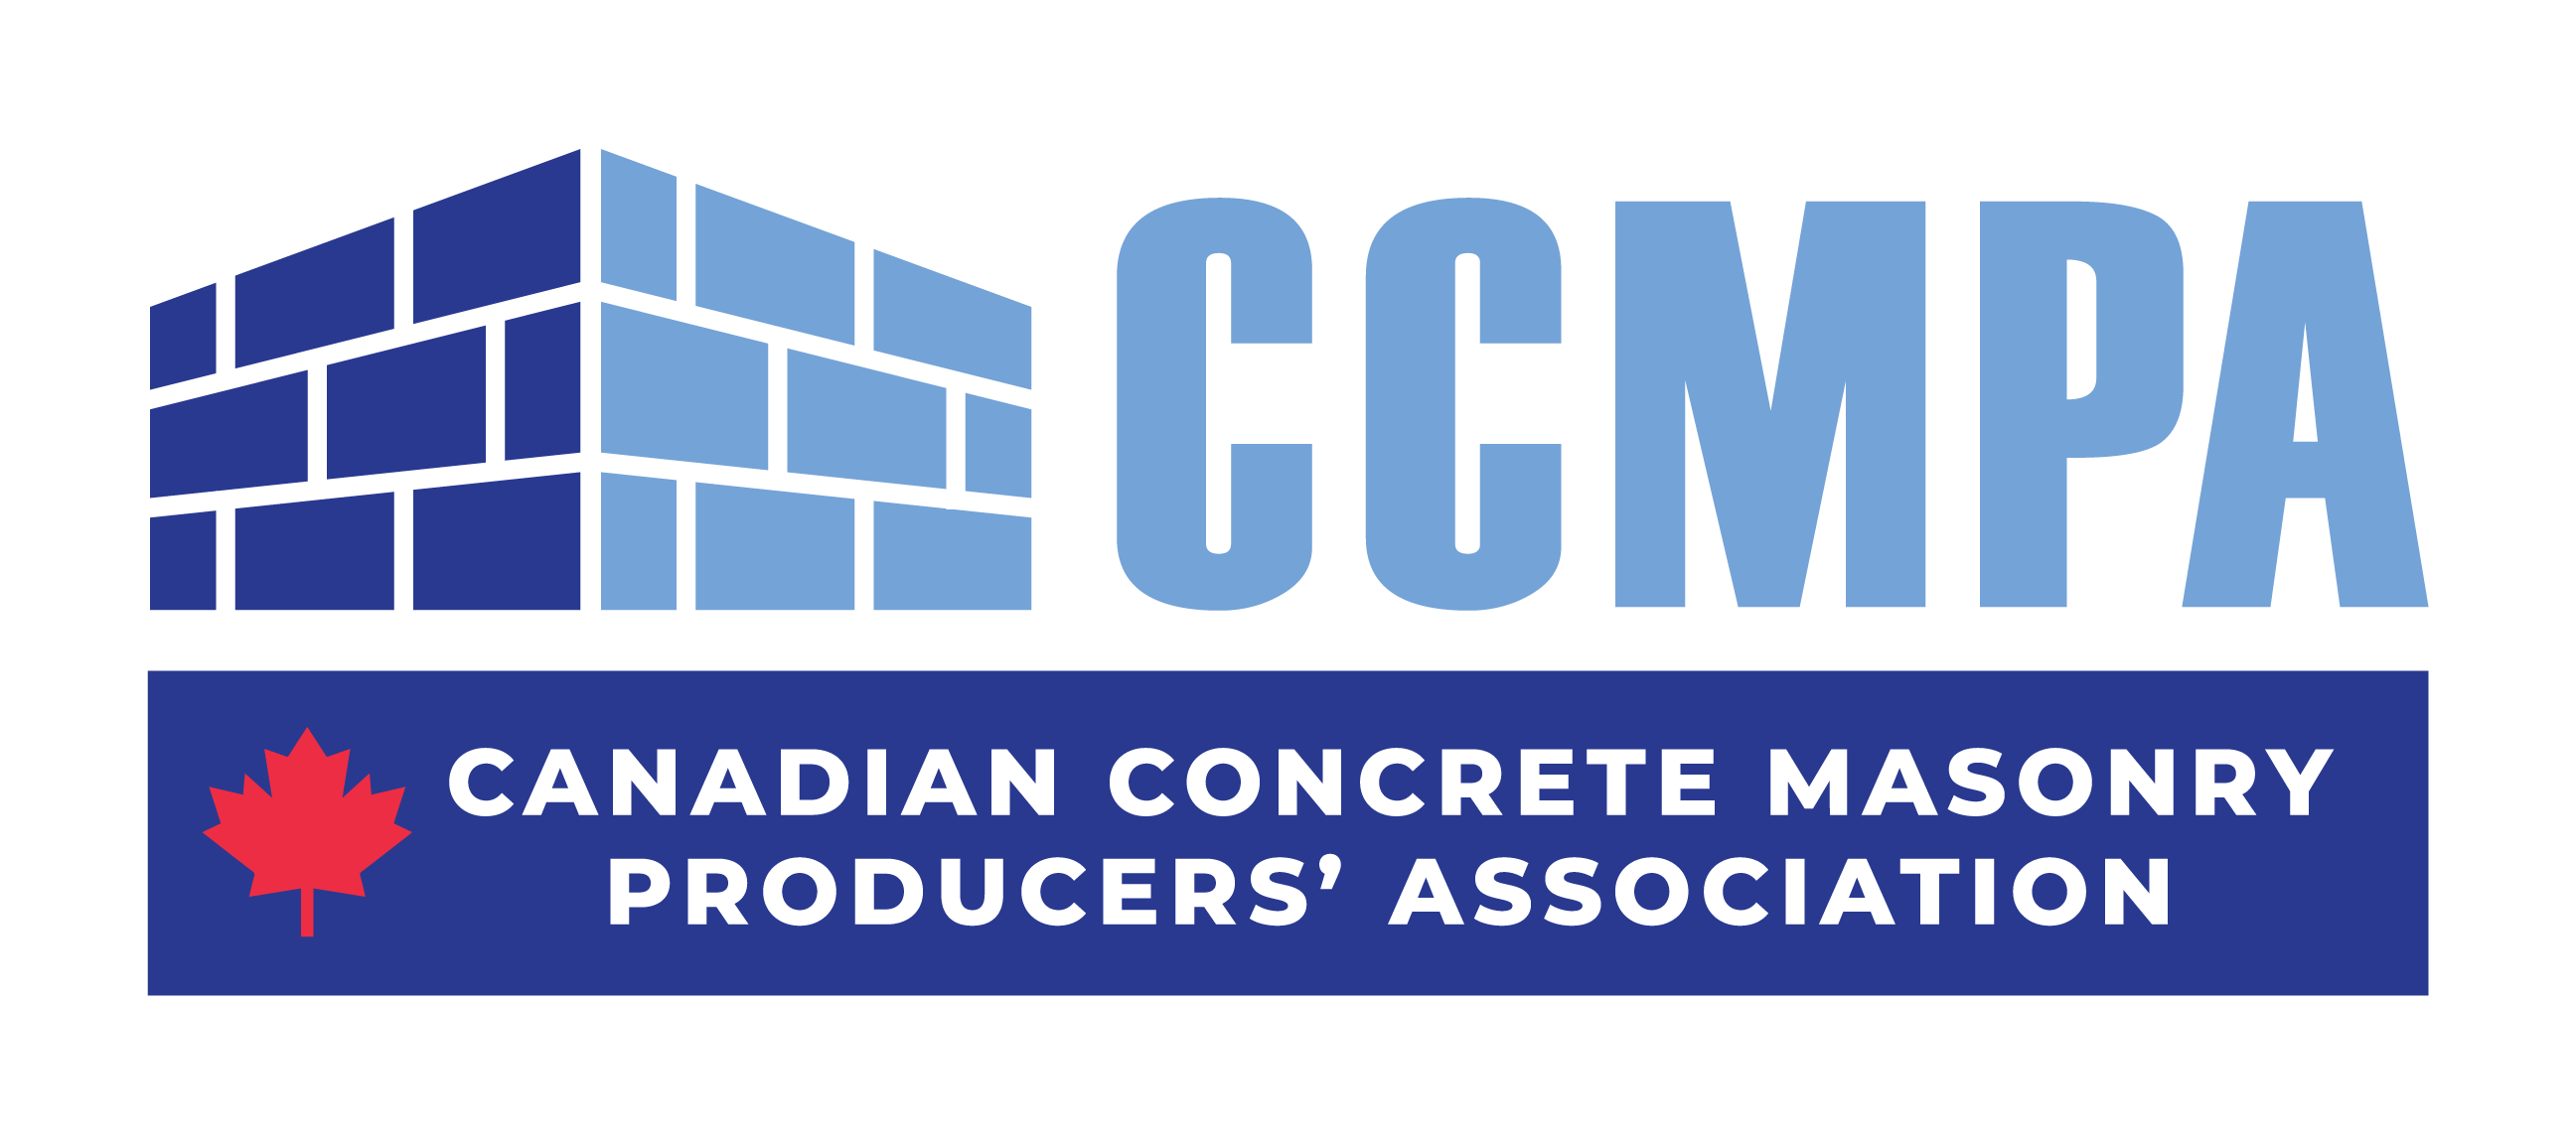 CCMPA - Canadian Concrete Masonry Producers Association